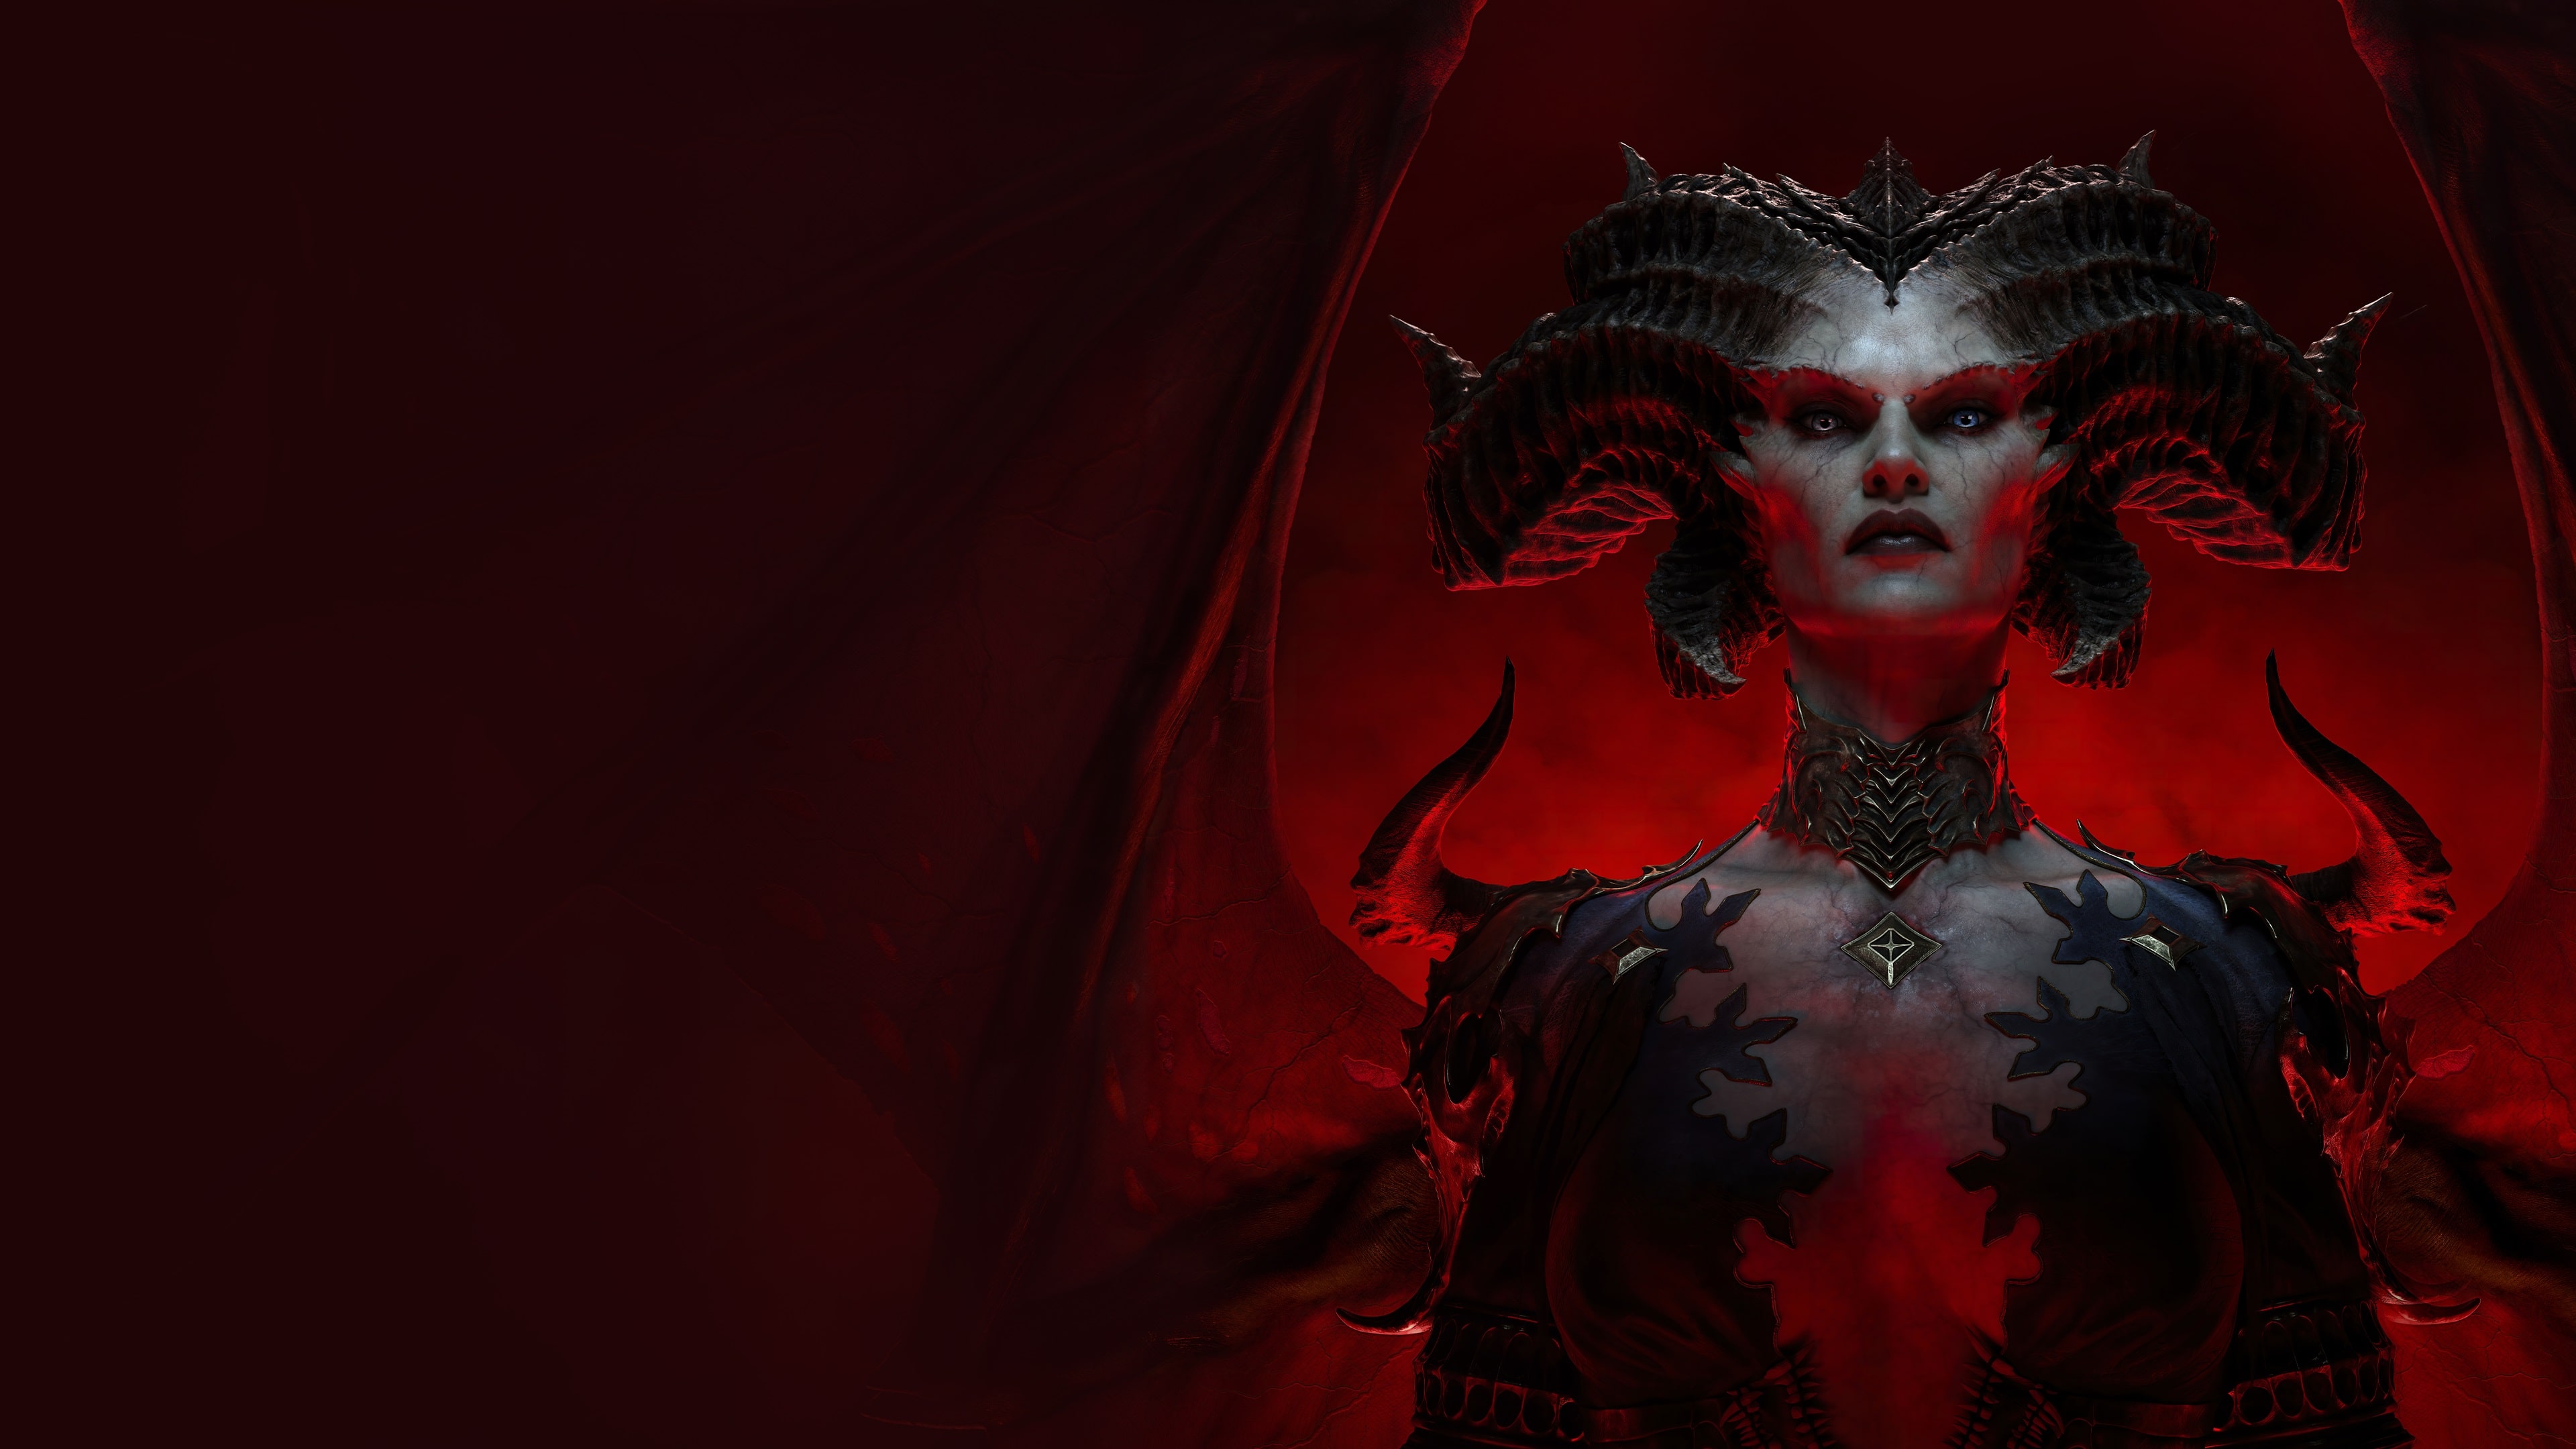 Diablo® IV-标准版 (游戏)